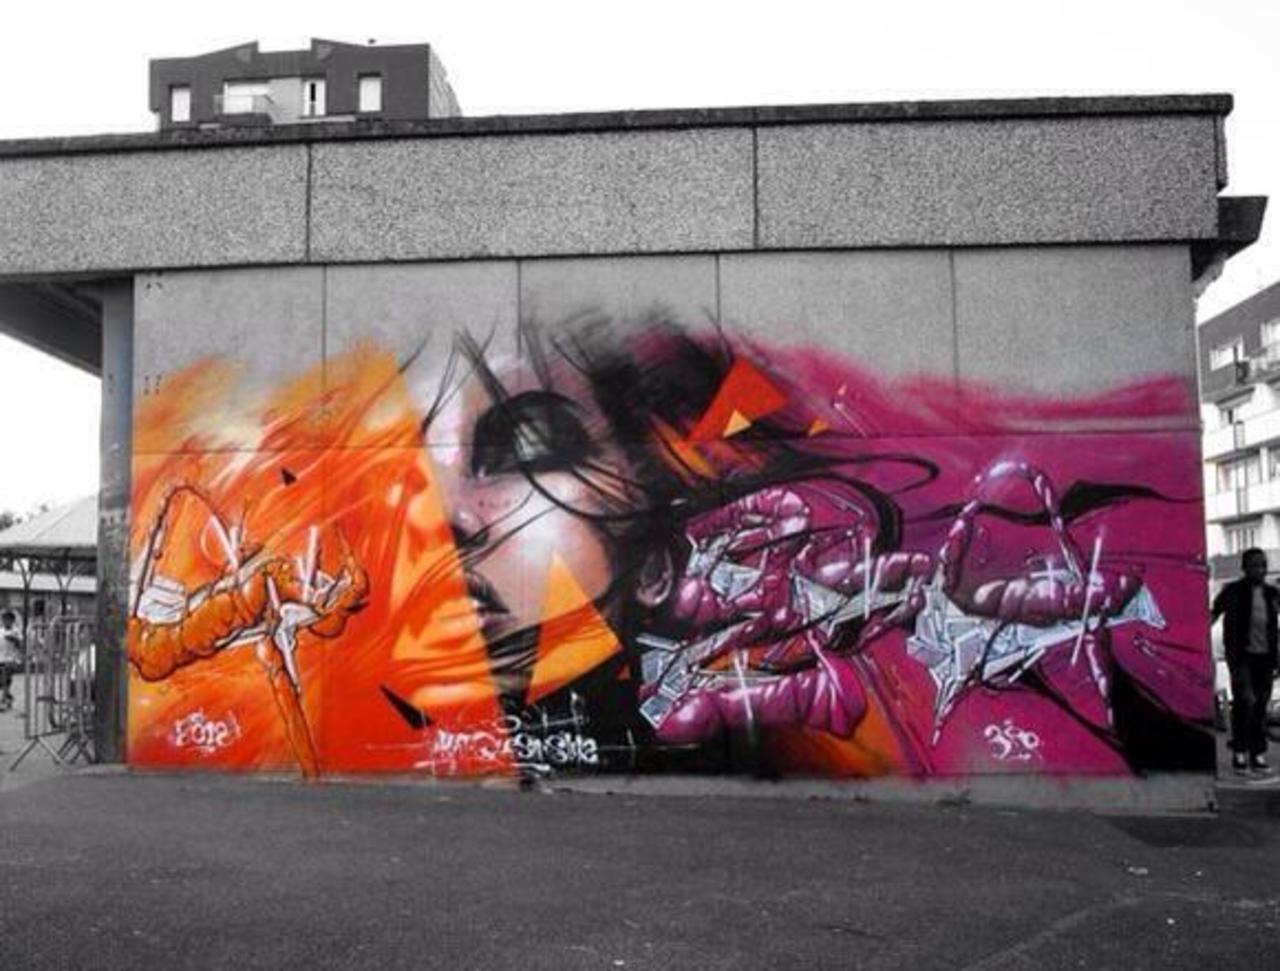 Colab of Sly2, Kat, Quesa Street Art wall in Paris, France #art #mural #graffiti #streetart http://t.co/y2QYWW7z6Q